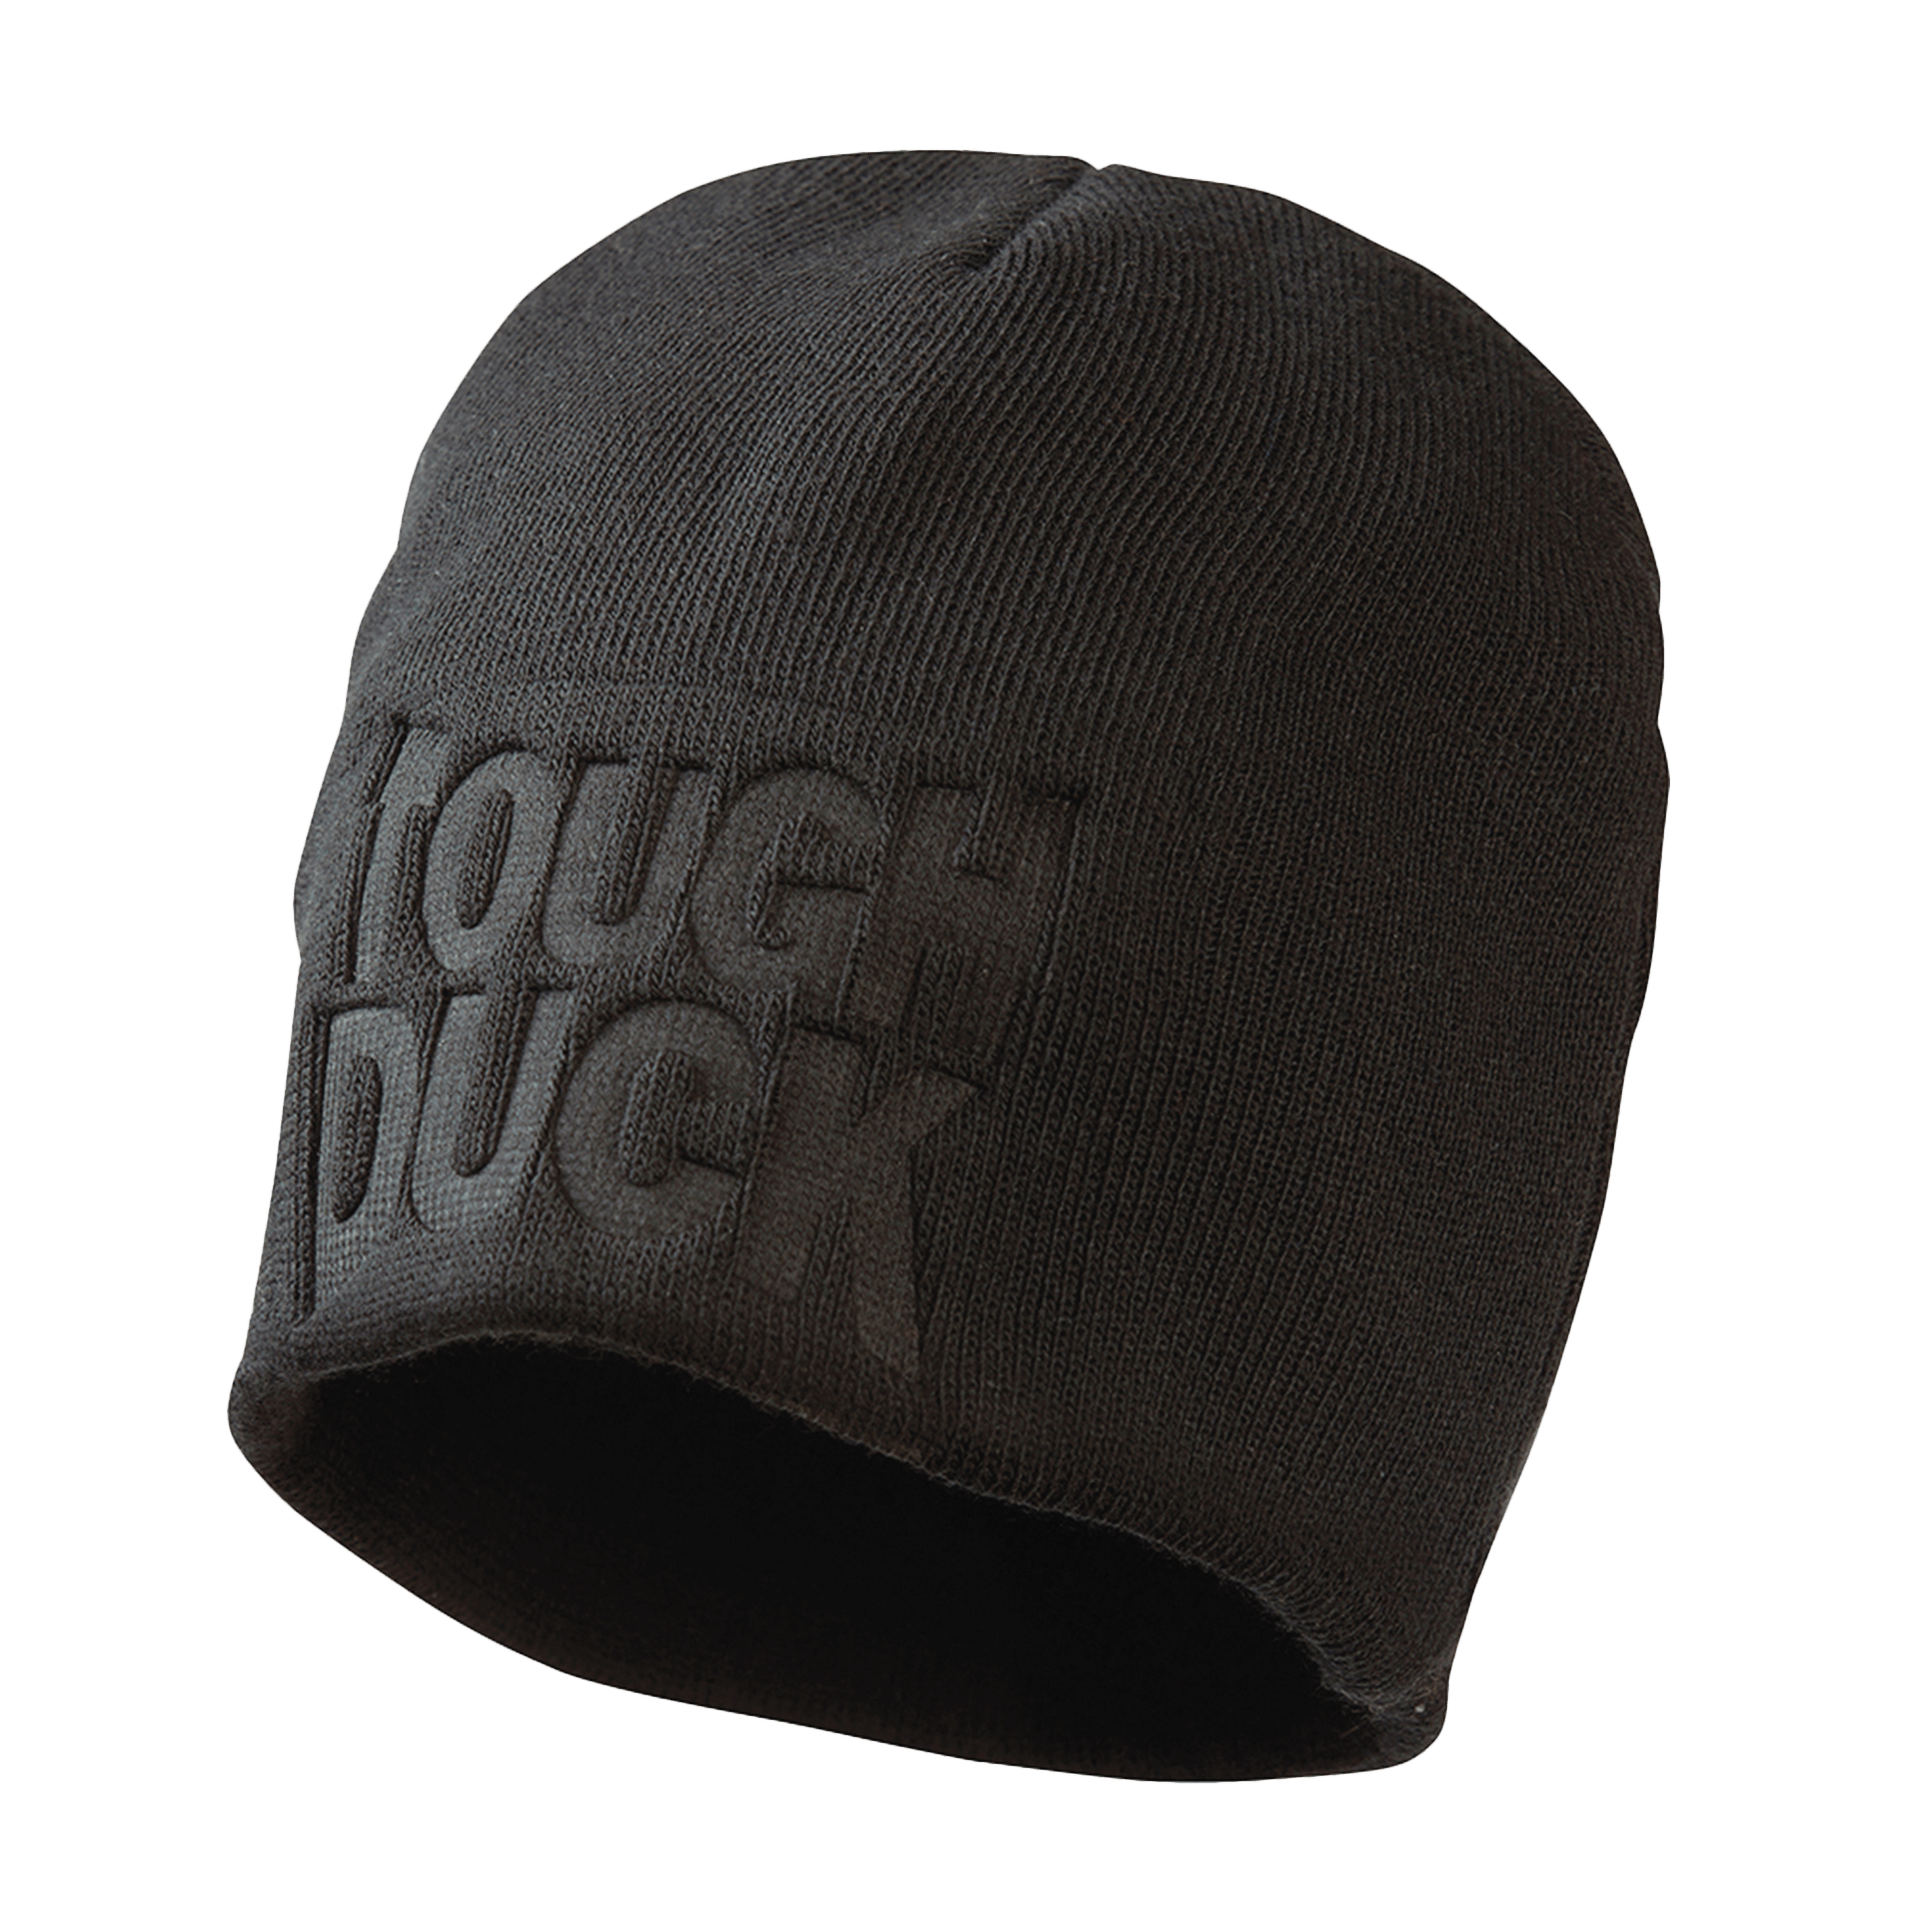 Tough Duck®Tough Duck Logo Knit Cap i36516